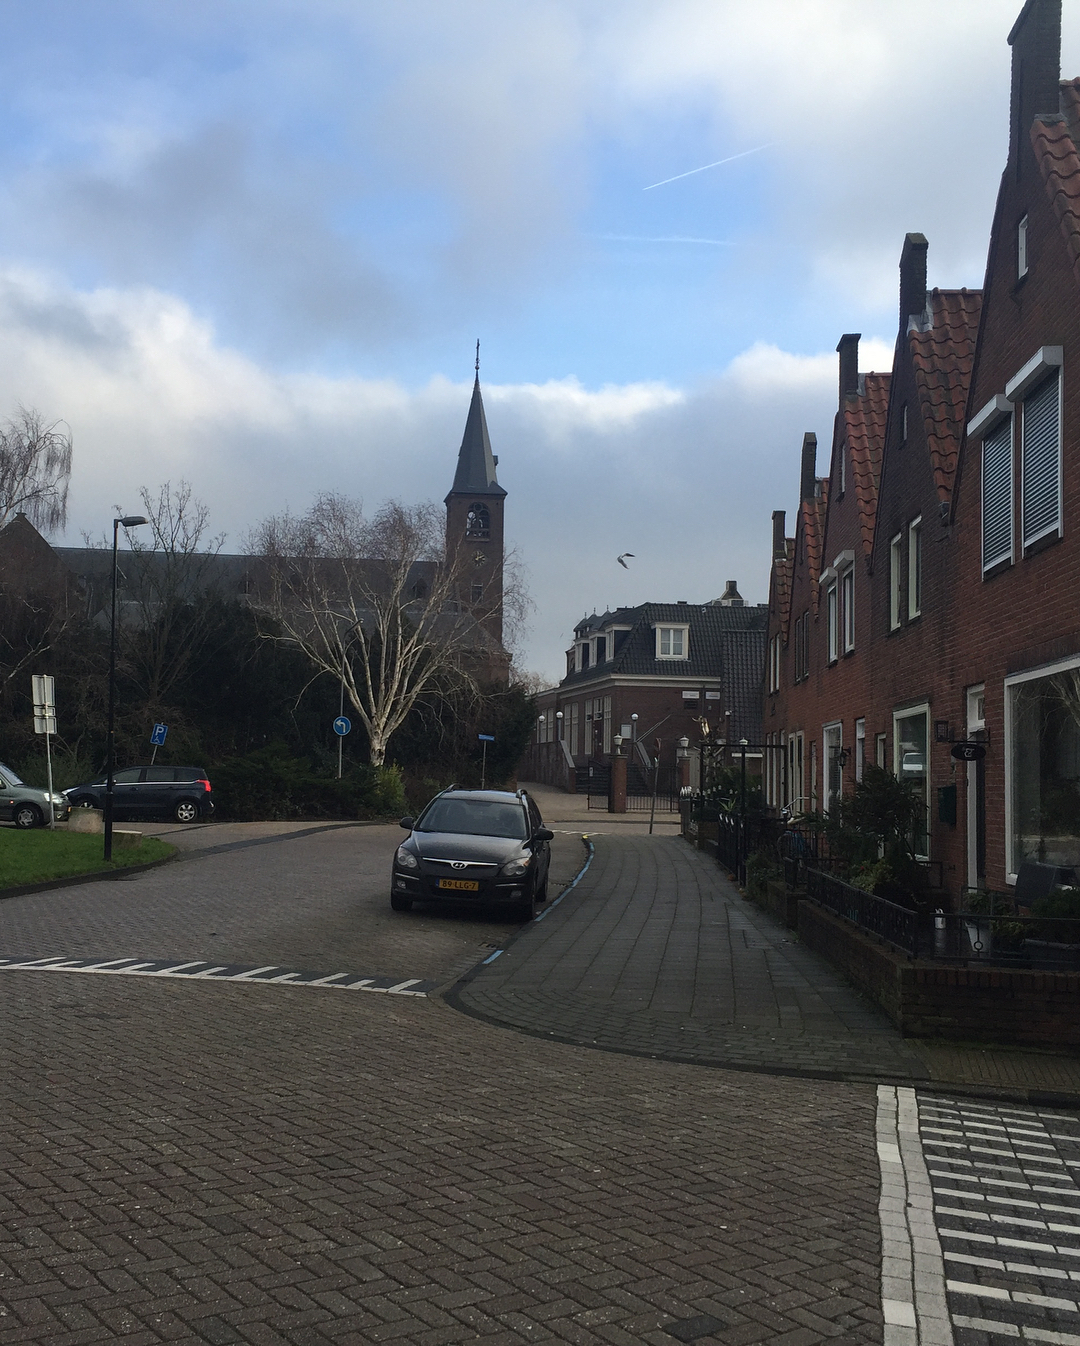 The Volendam street